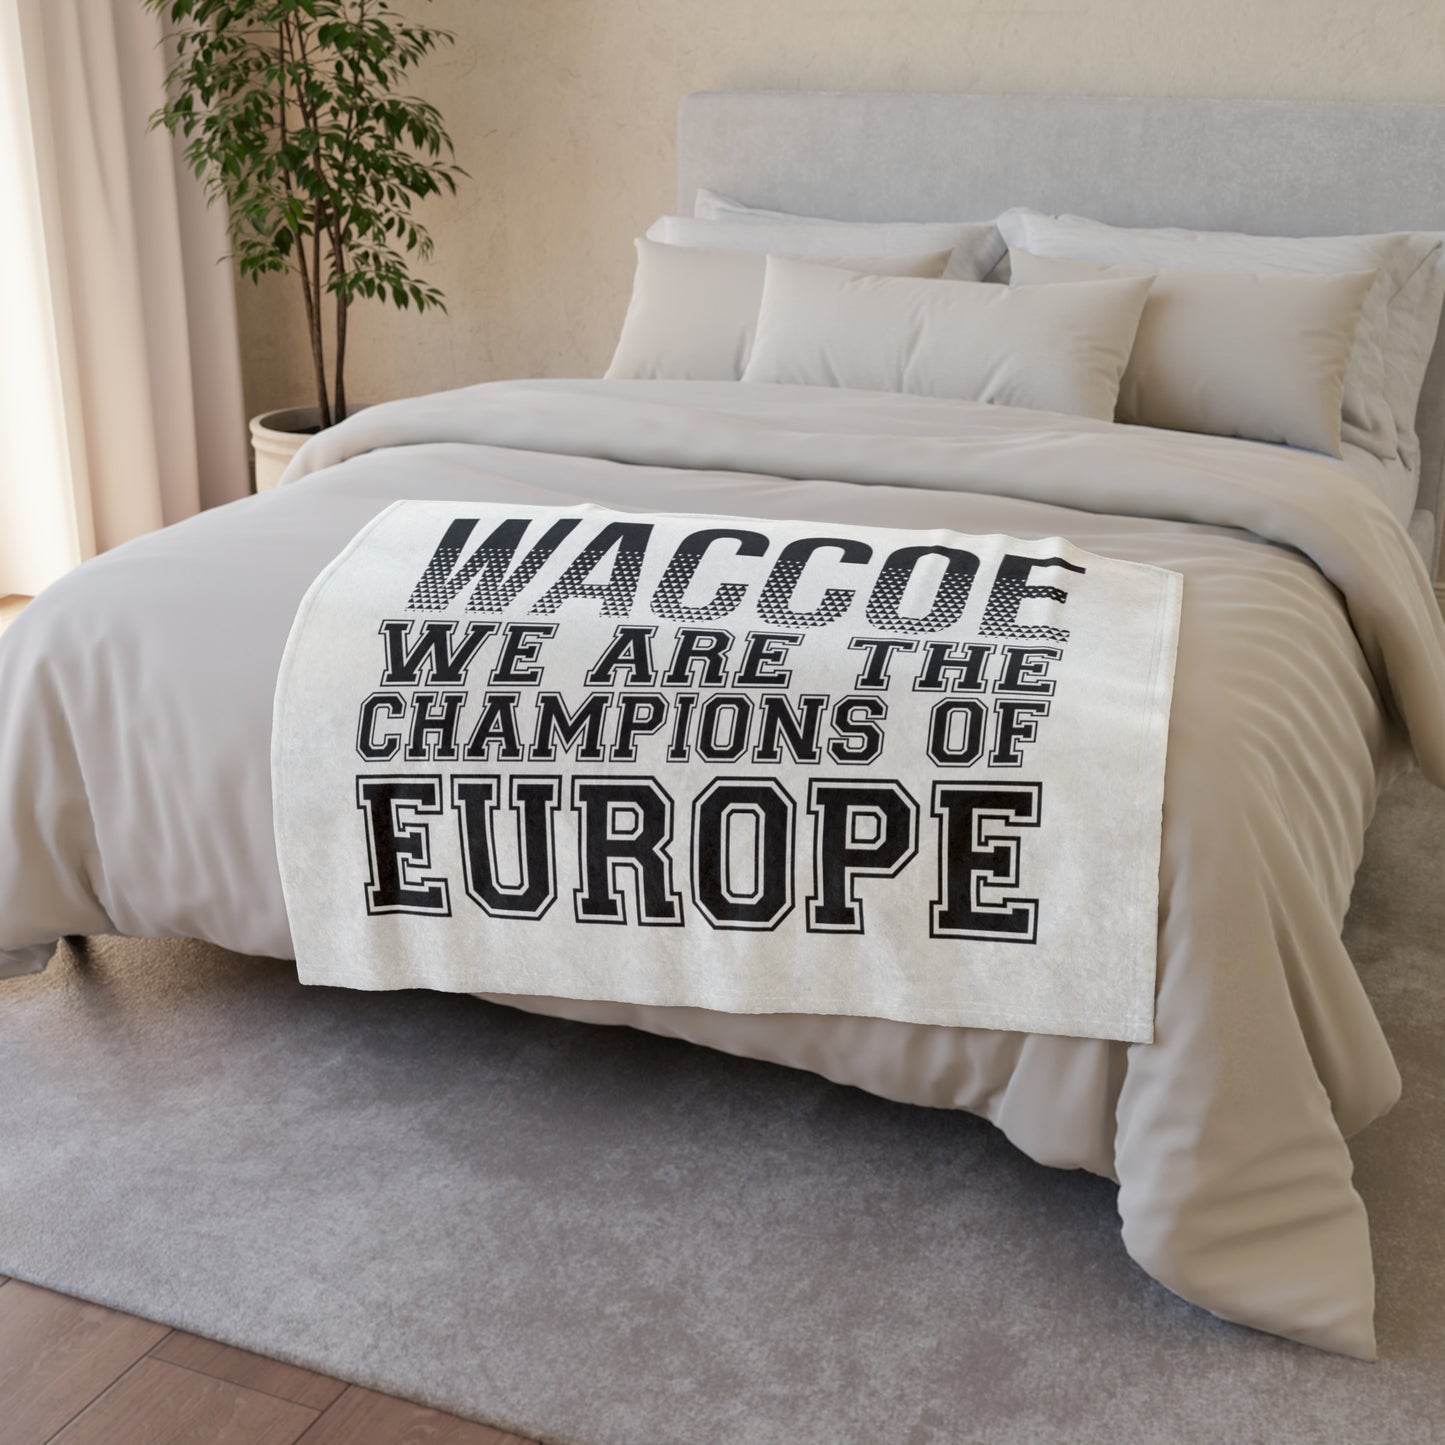 WACCOE Blanket